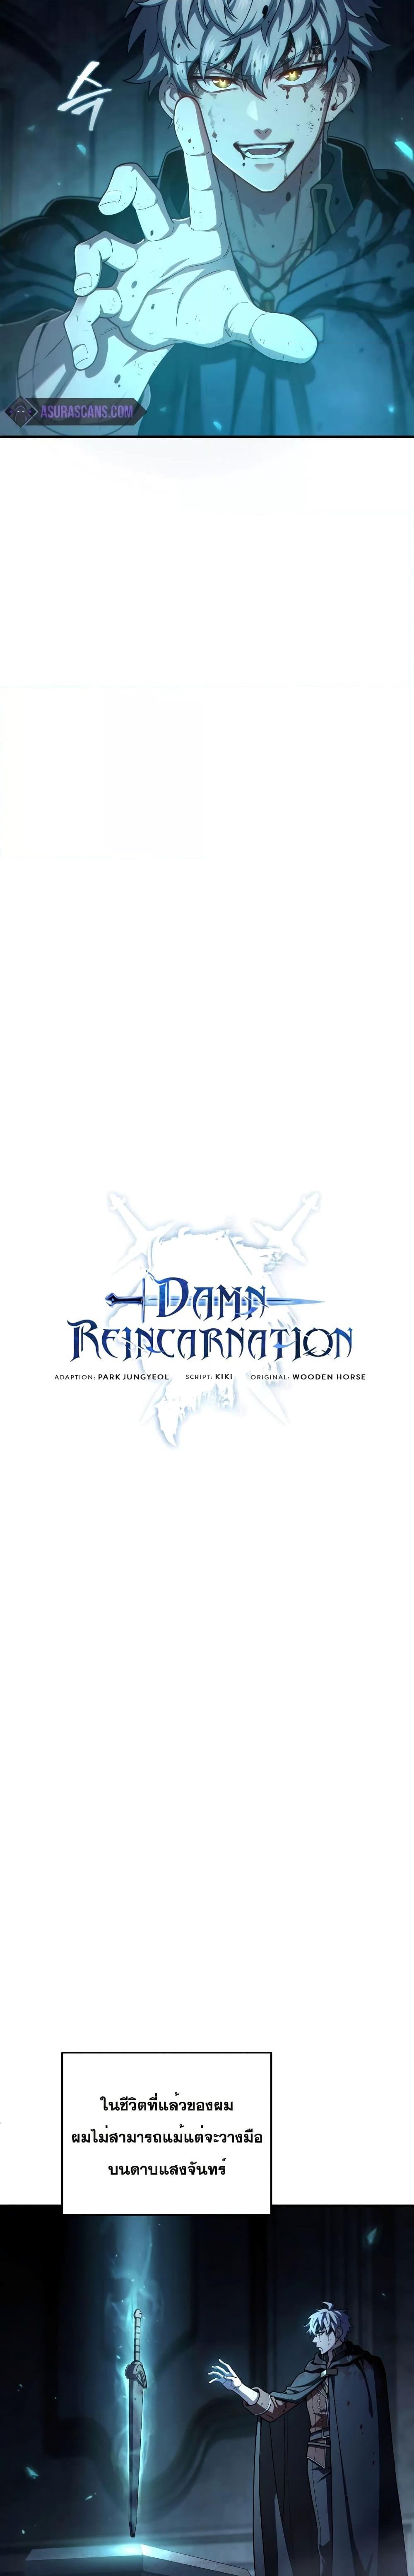 Damn Reincarnation 62 08